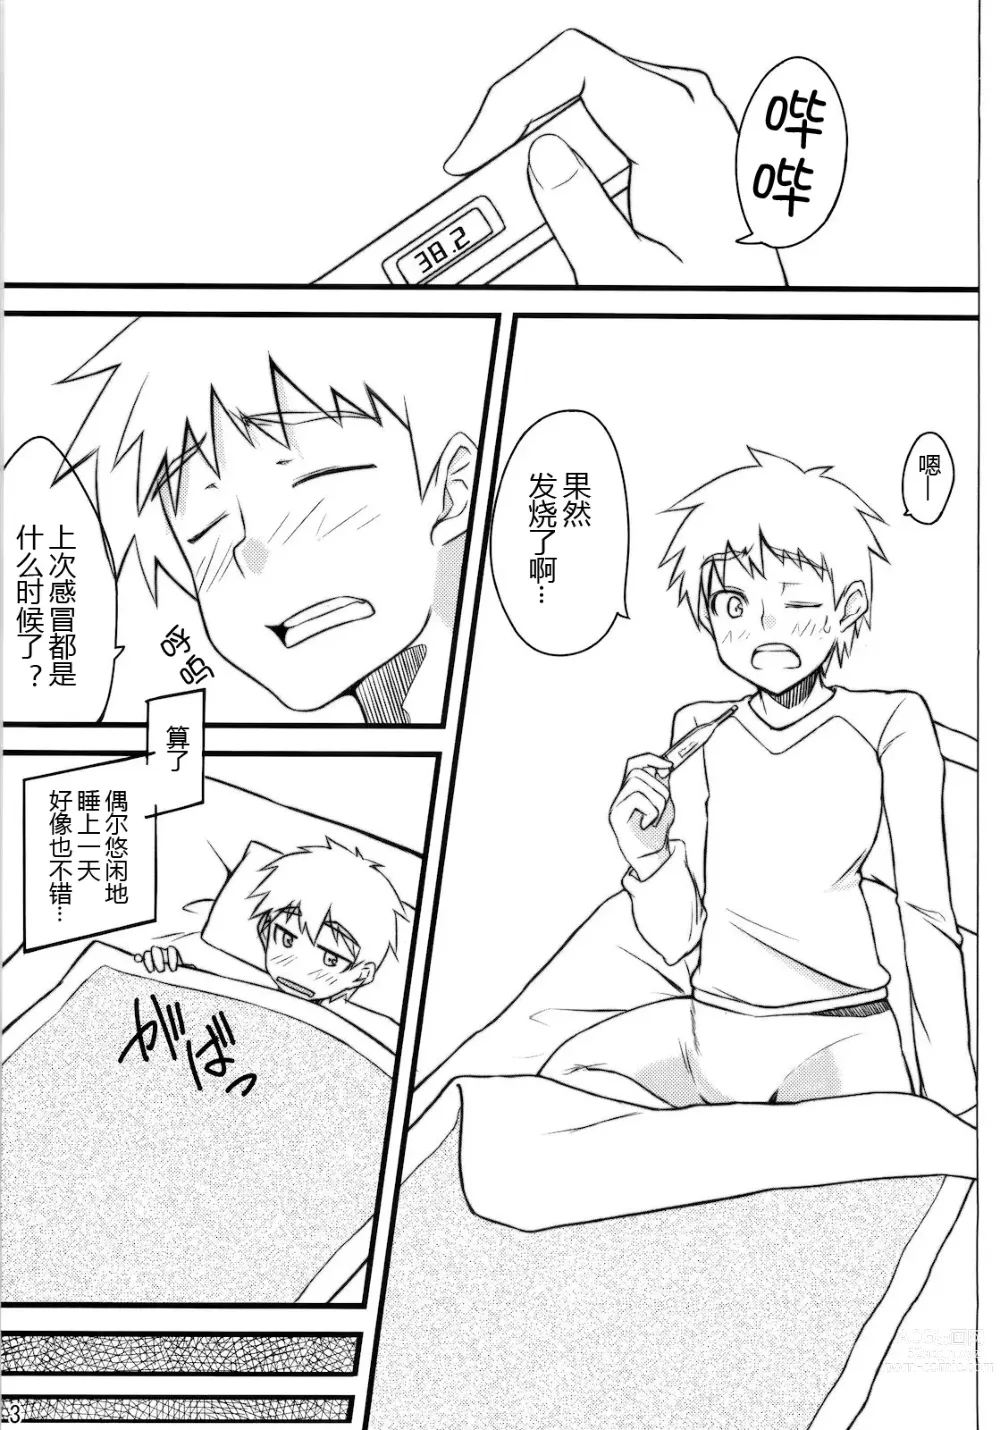 Page 3 of doujinshi R5